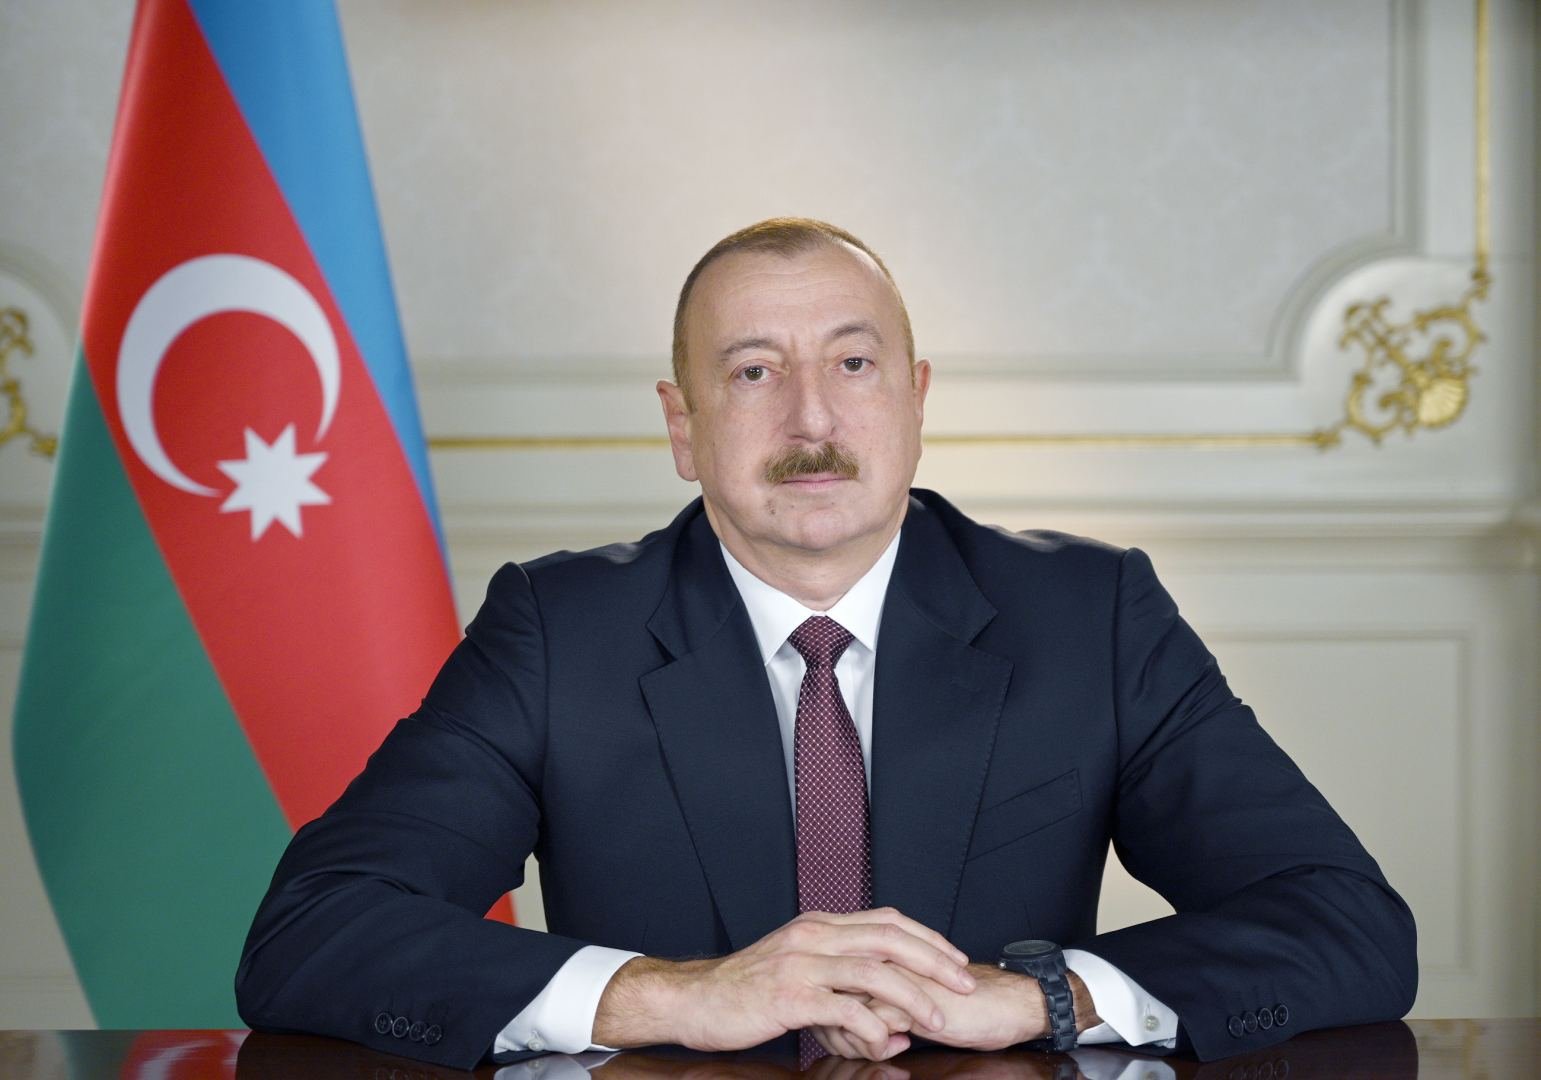 President Ilham Aliyev arrives in Urgench city, Uzbekistan